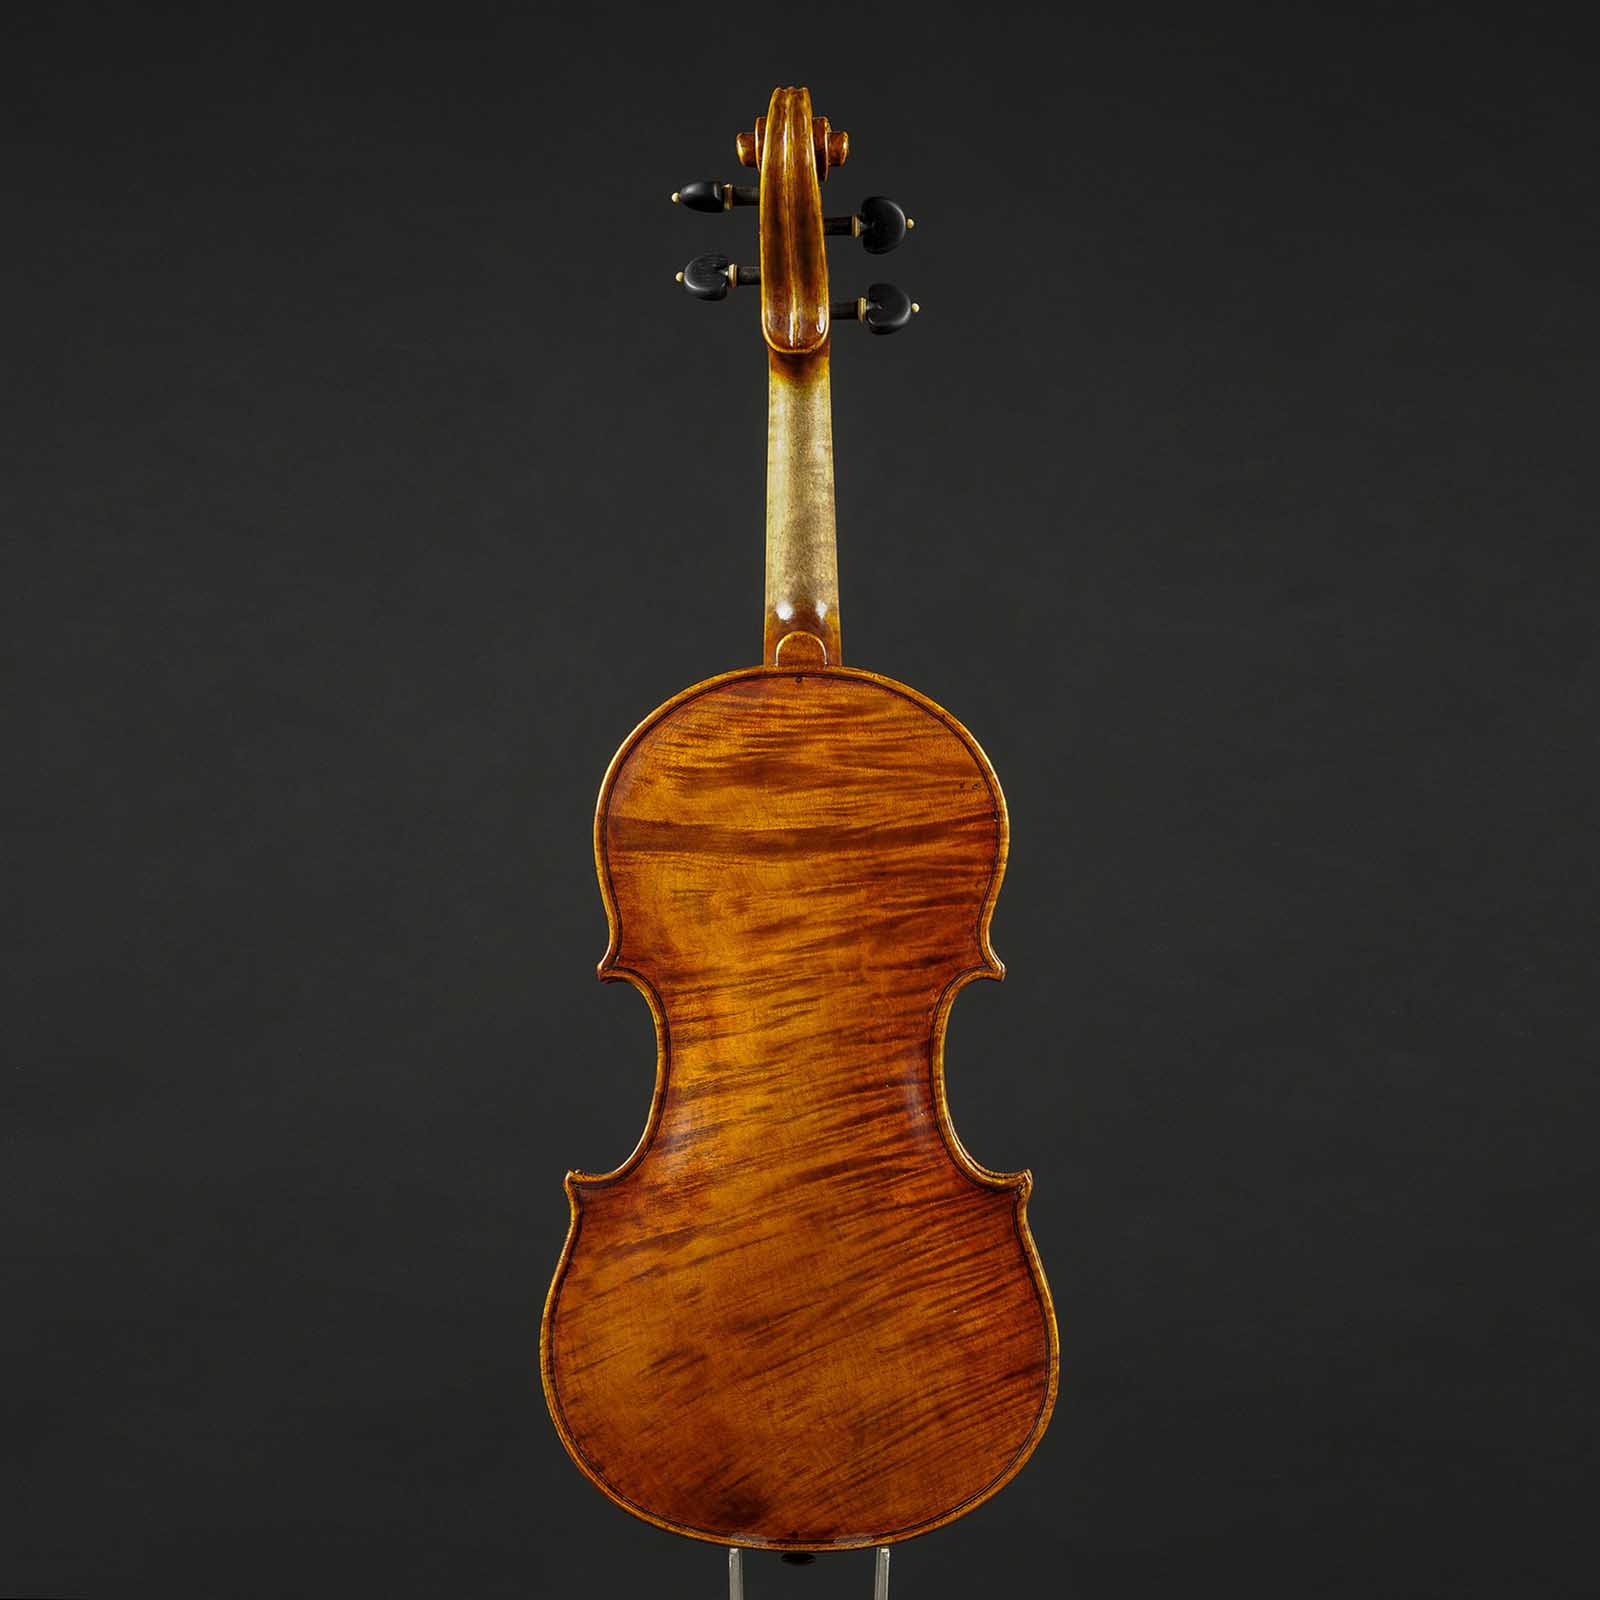 Nicolò Gagliano Neaples 1755 “Renaissance Wood“ - Image 2